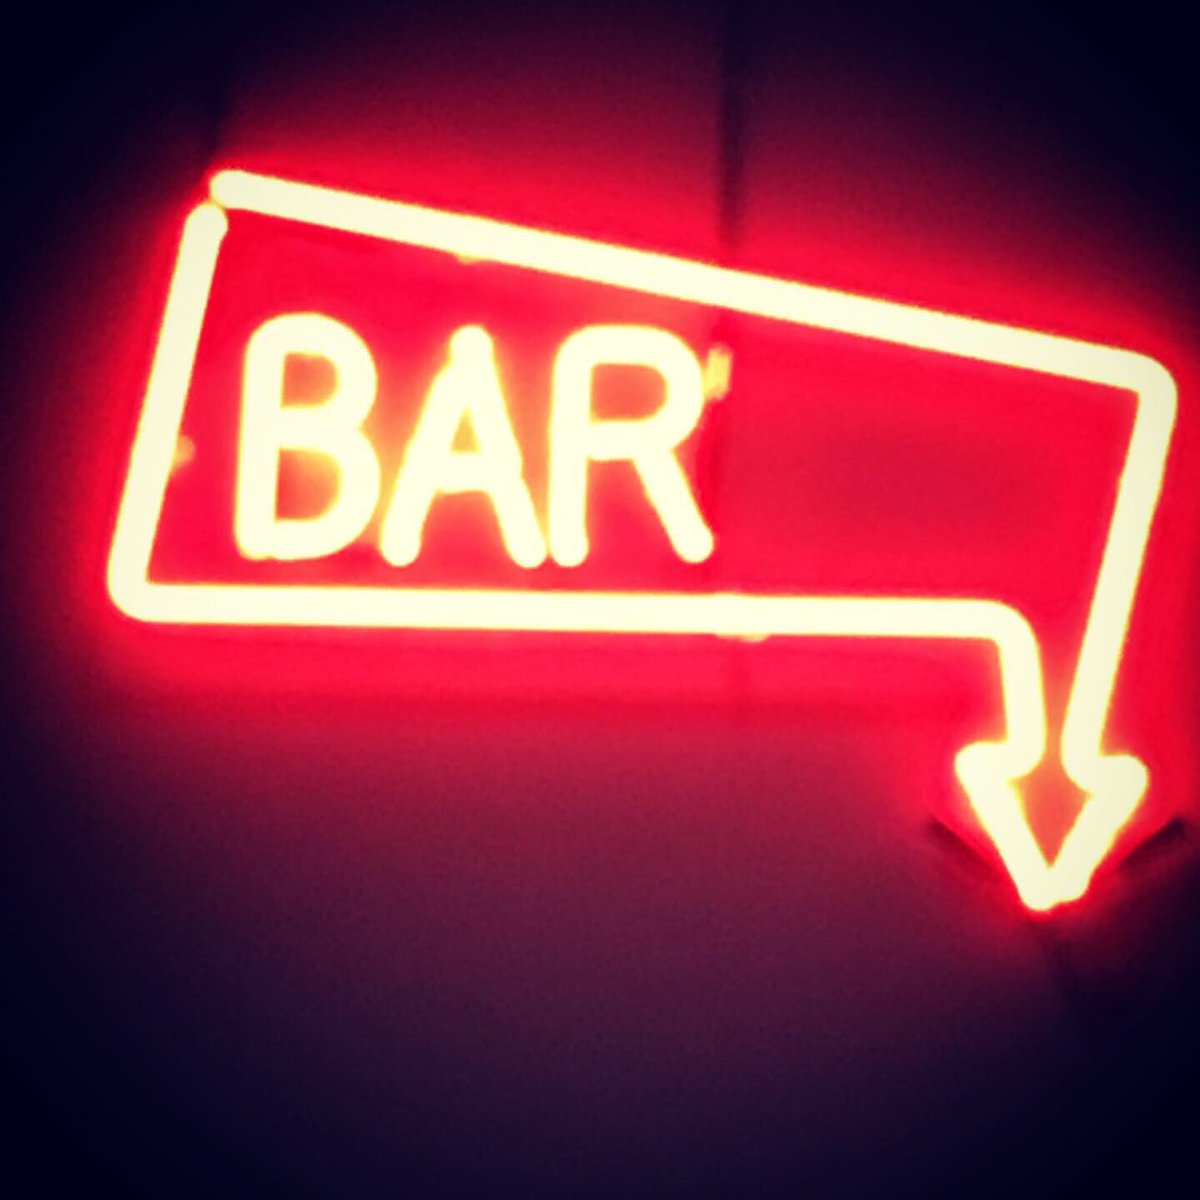 @a1designsuk fitted our bespoke ‘Bar’ neon today.  We’re very happy with how it looks. 
.
#a1designsuk #bespokedesign #bespokeneon #neon #neonsignage #realneon #bar #barsign #interiordesign #hakata #hakataramen #hakataramenbar #ramenya #ramen #london #openingsoon